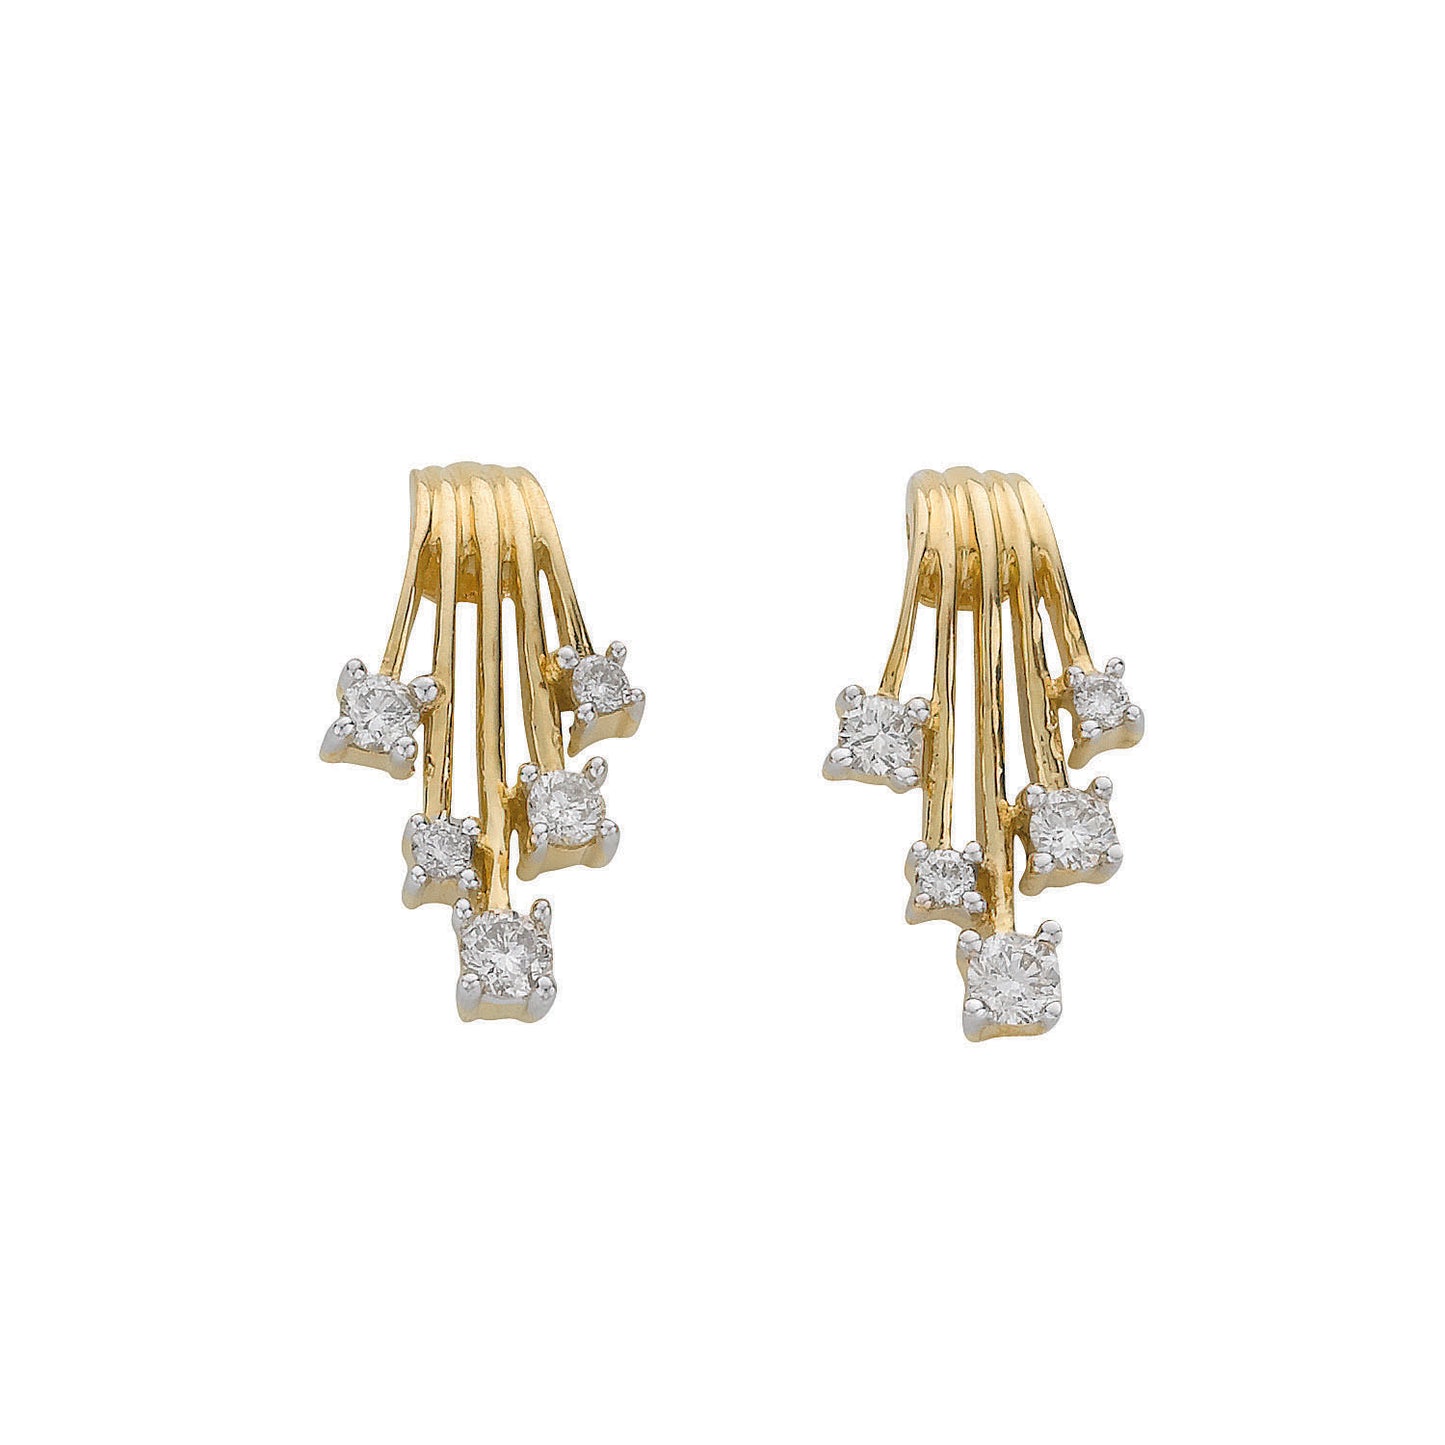 9ct Gold 0.25ct Diamond Studs Earrings